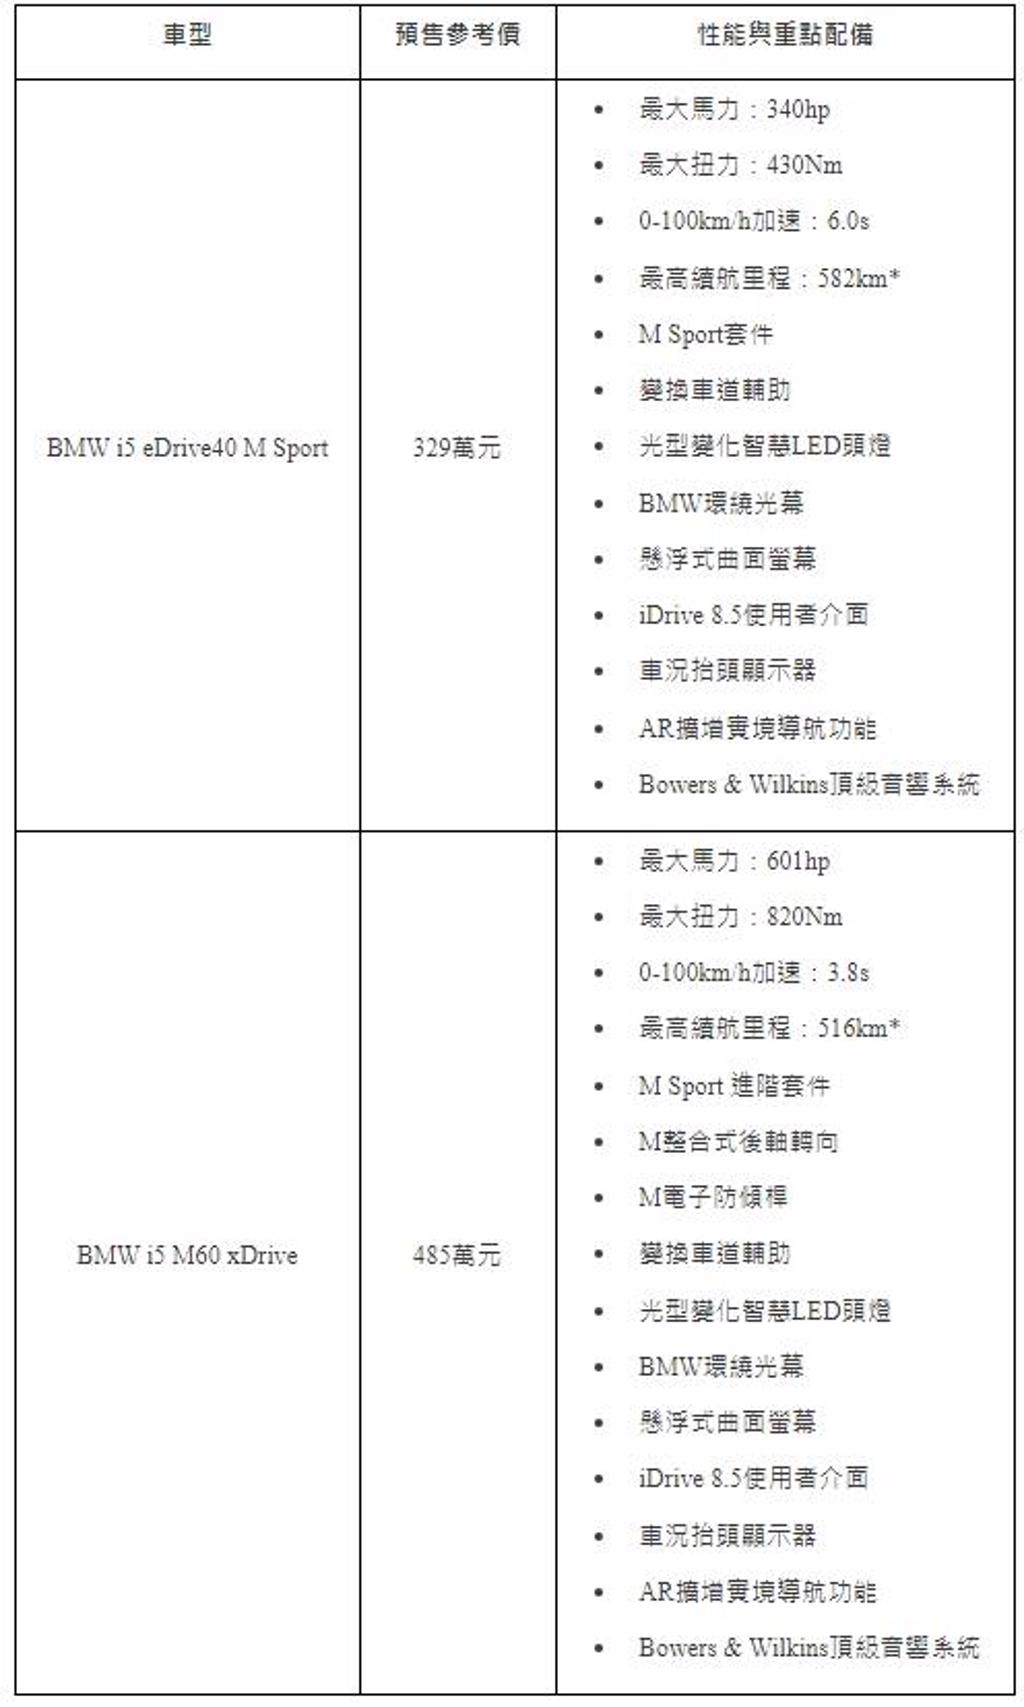  BMW i5 純電豪華房車台灣預售價/重點配備(圖/DDCAR)